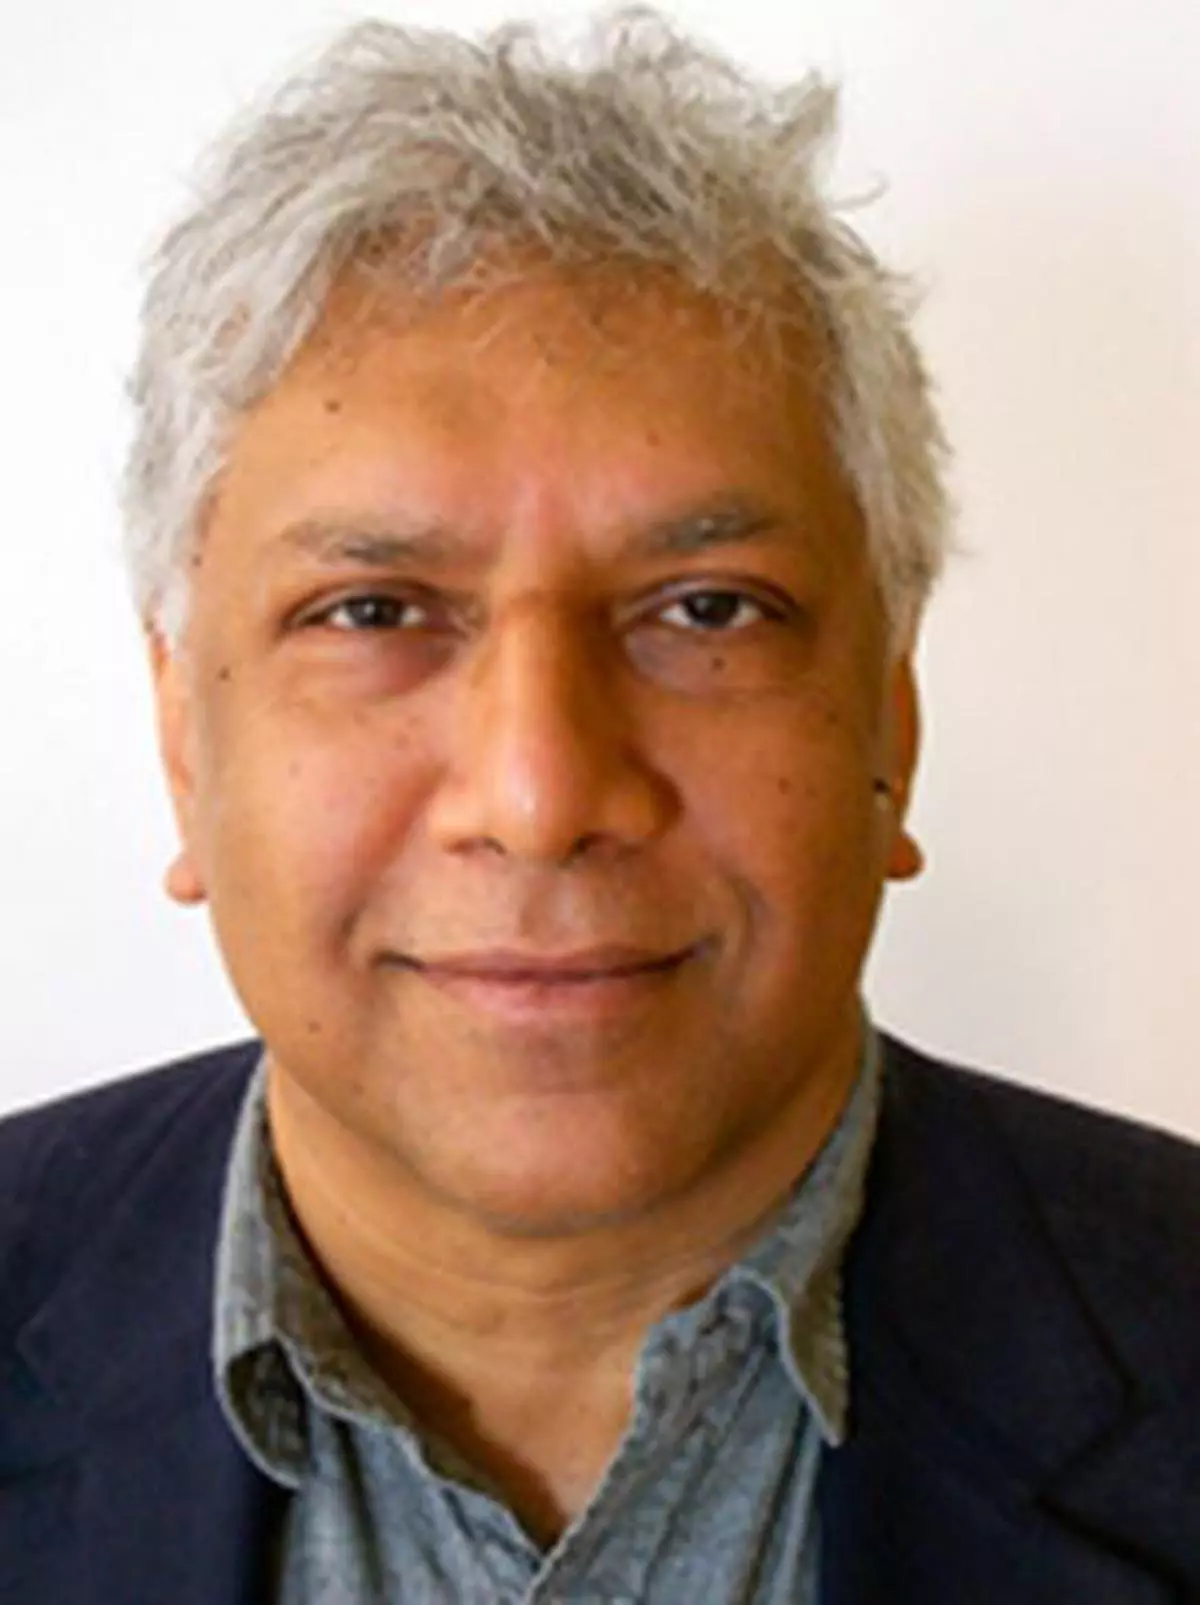 An image of Pulitzer Prize winner Vijay Seshadri. Photo: The Pulitzer Prizes webpage